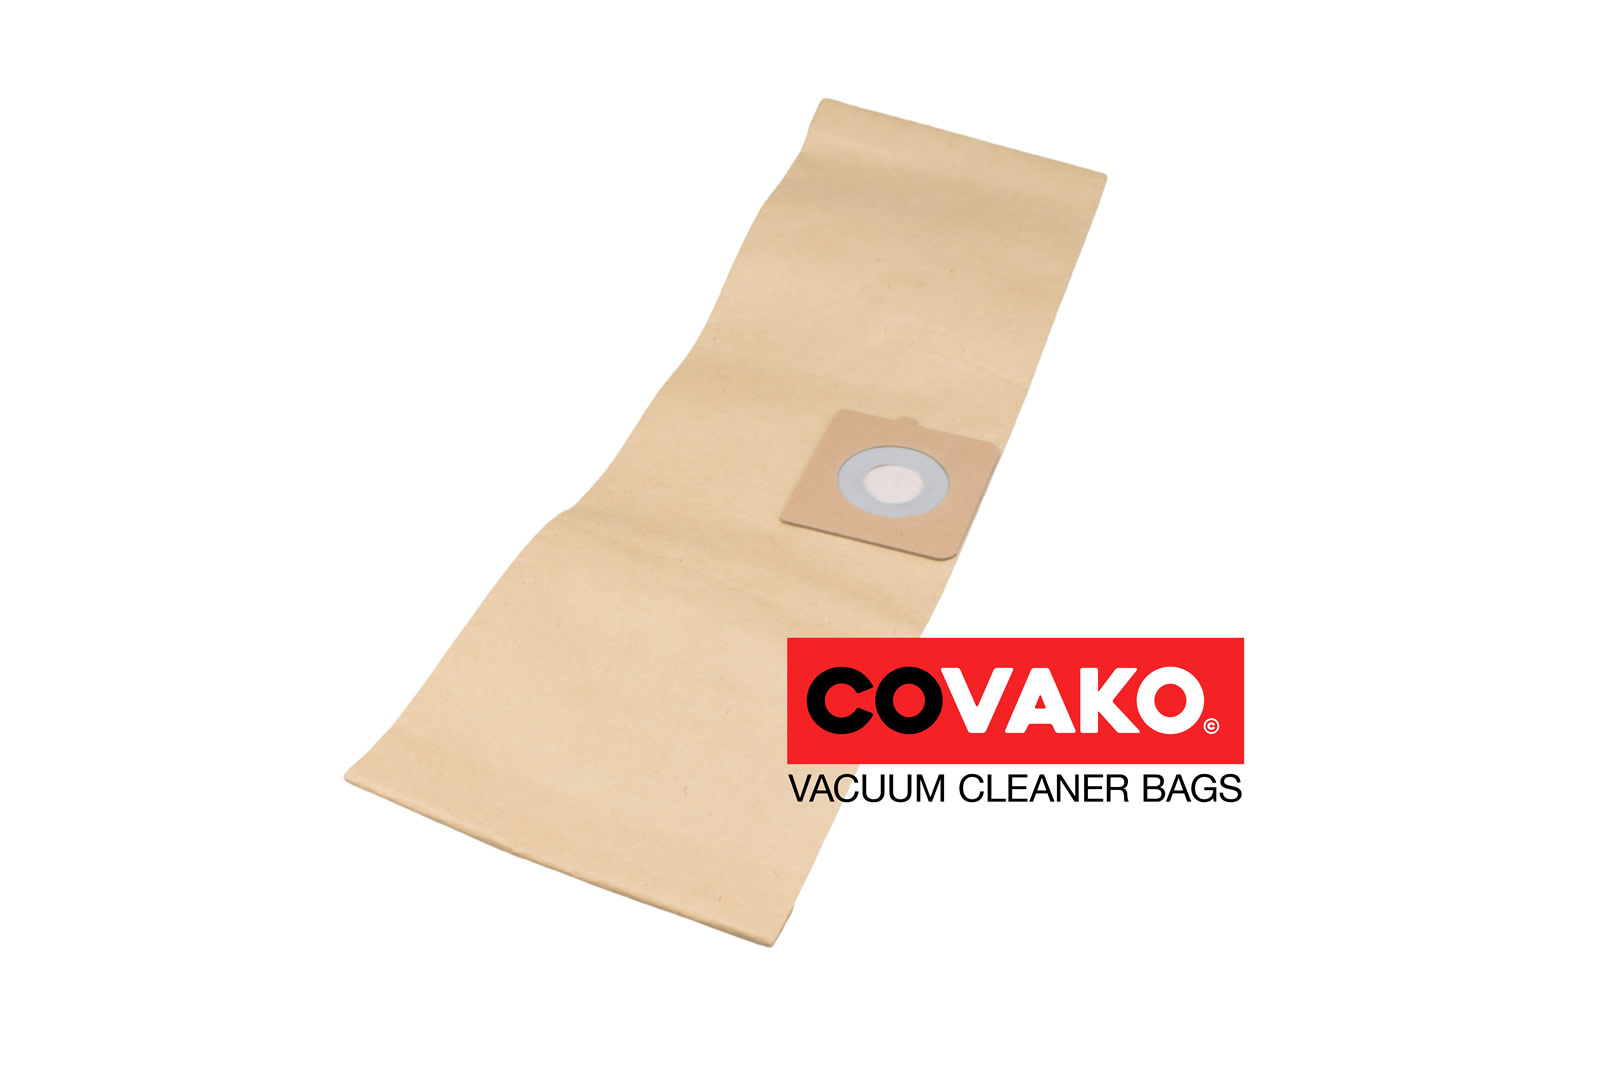 Clean a la Card 491015 / Paper - Clean a la Card vacuum cleaner bags